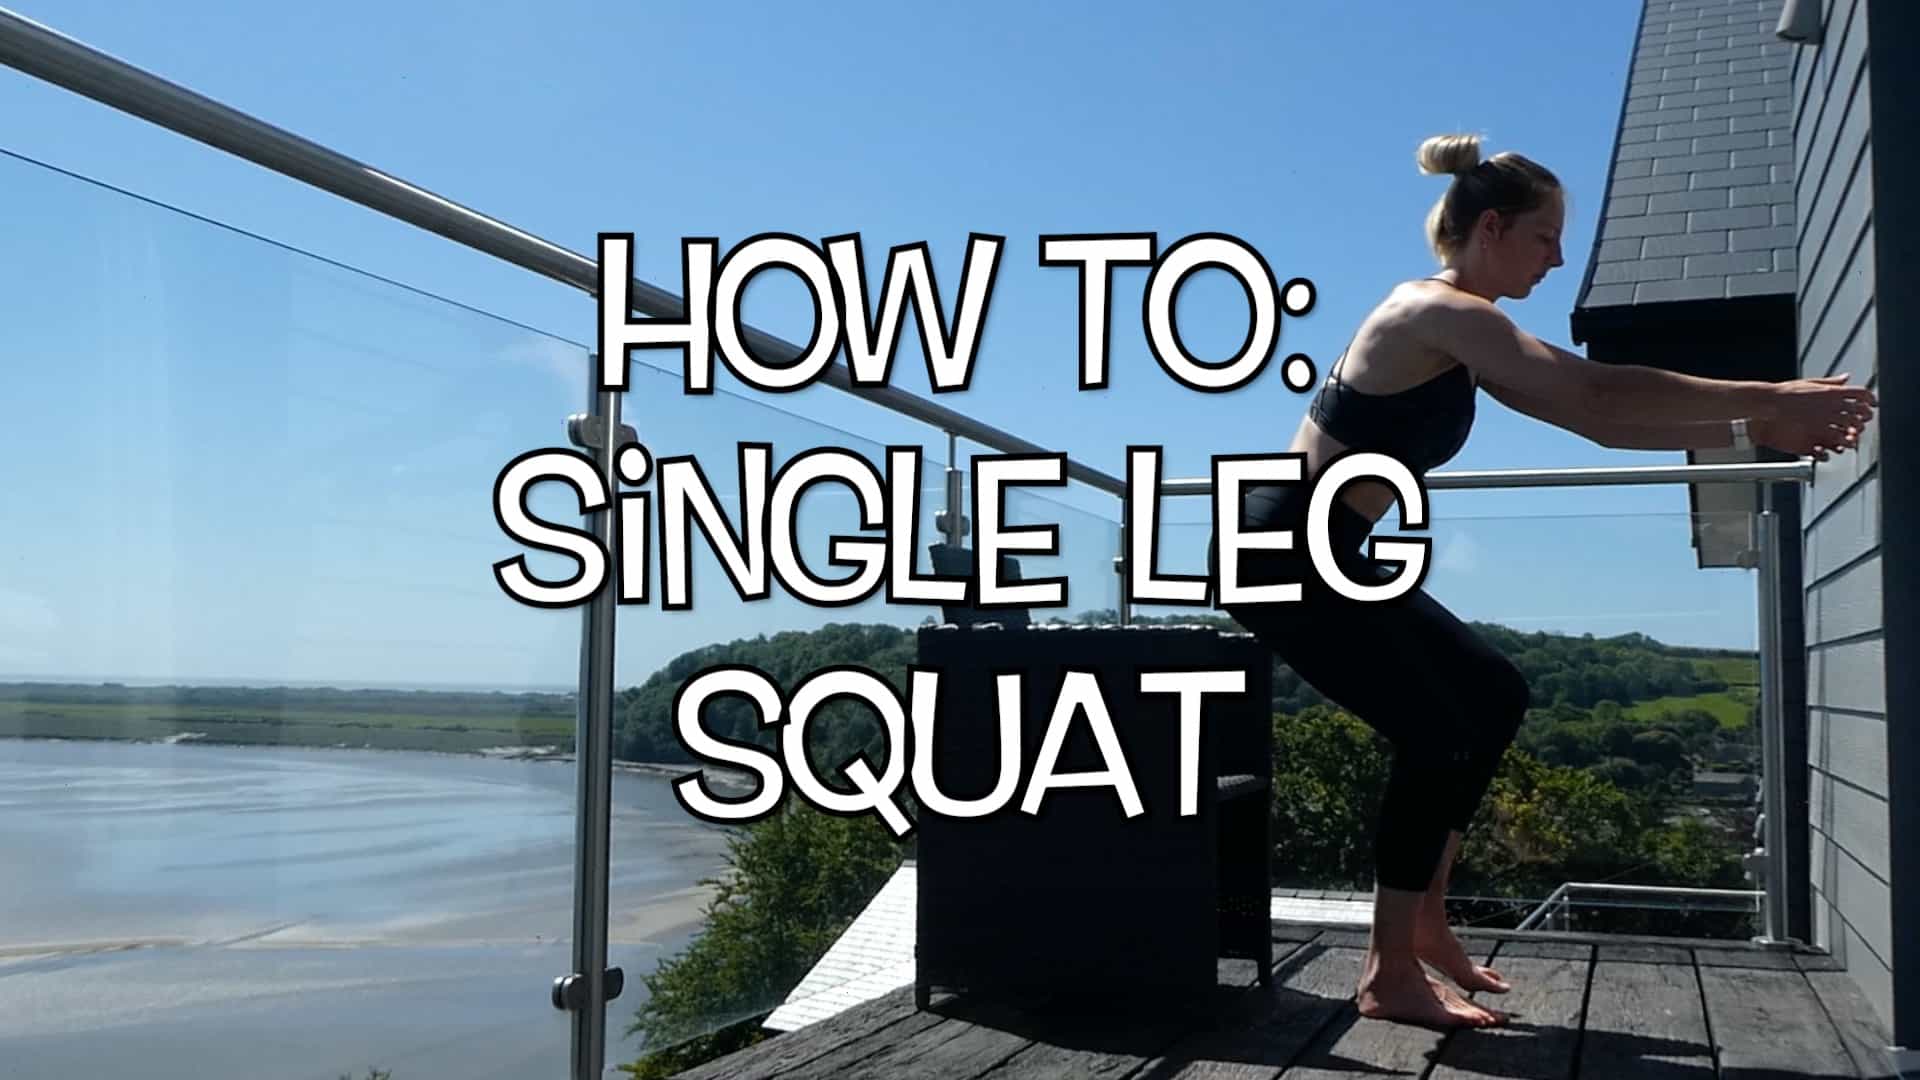 Single-leg Squat